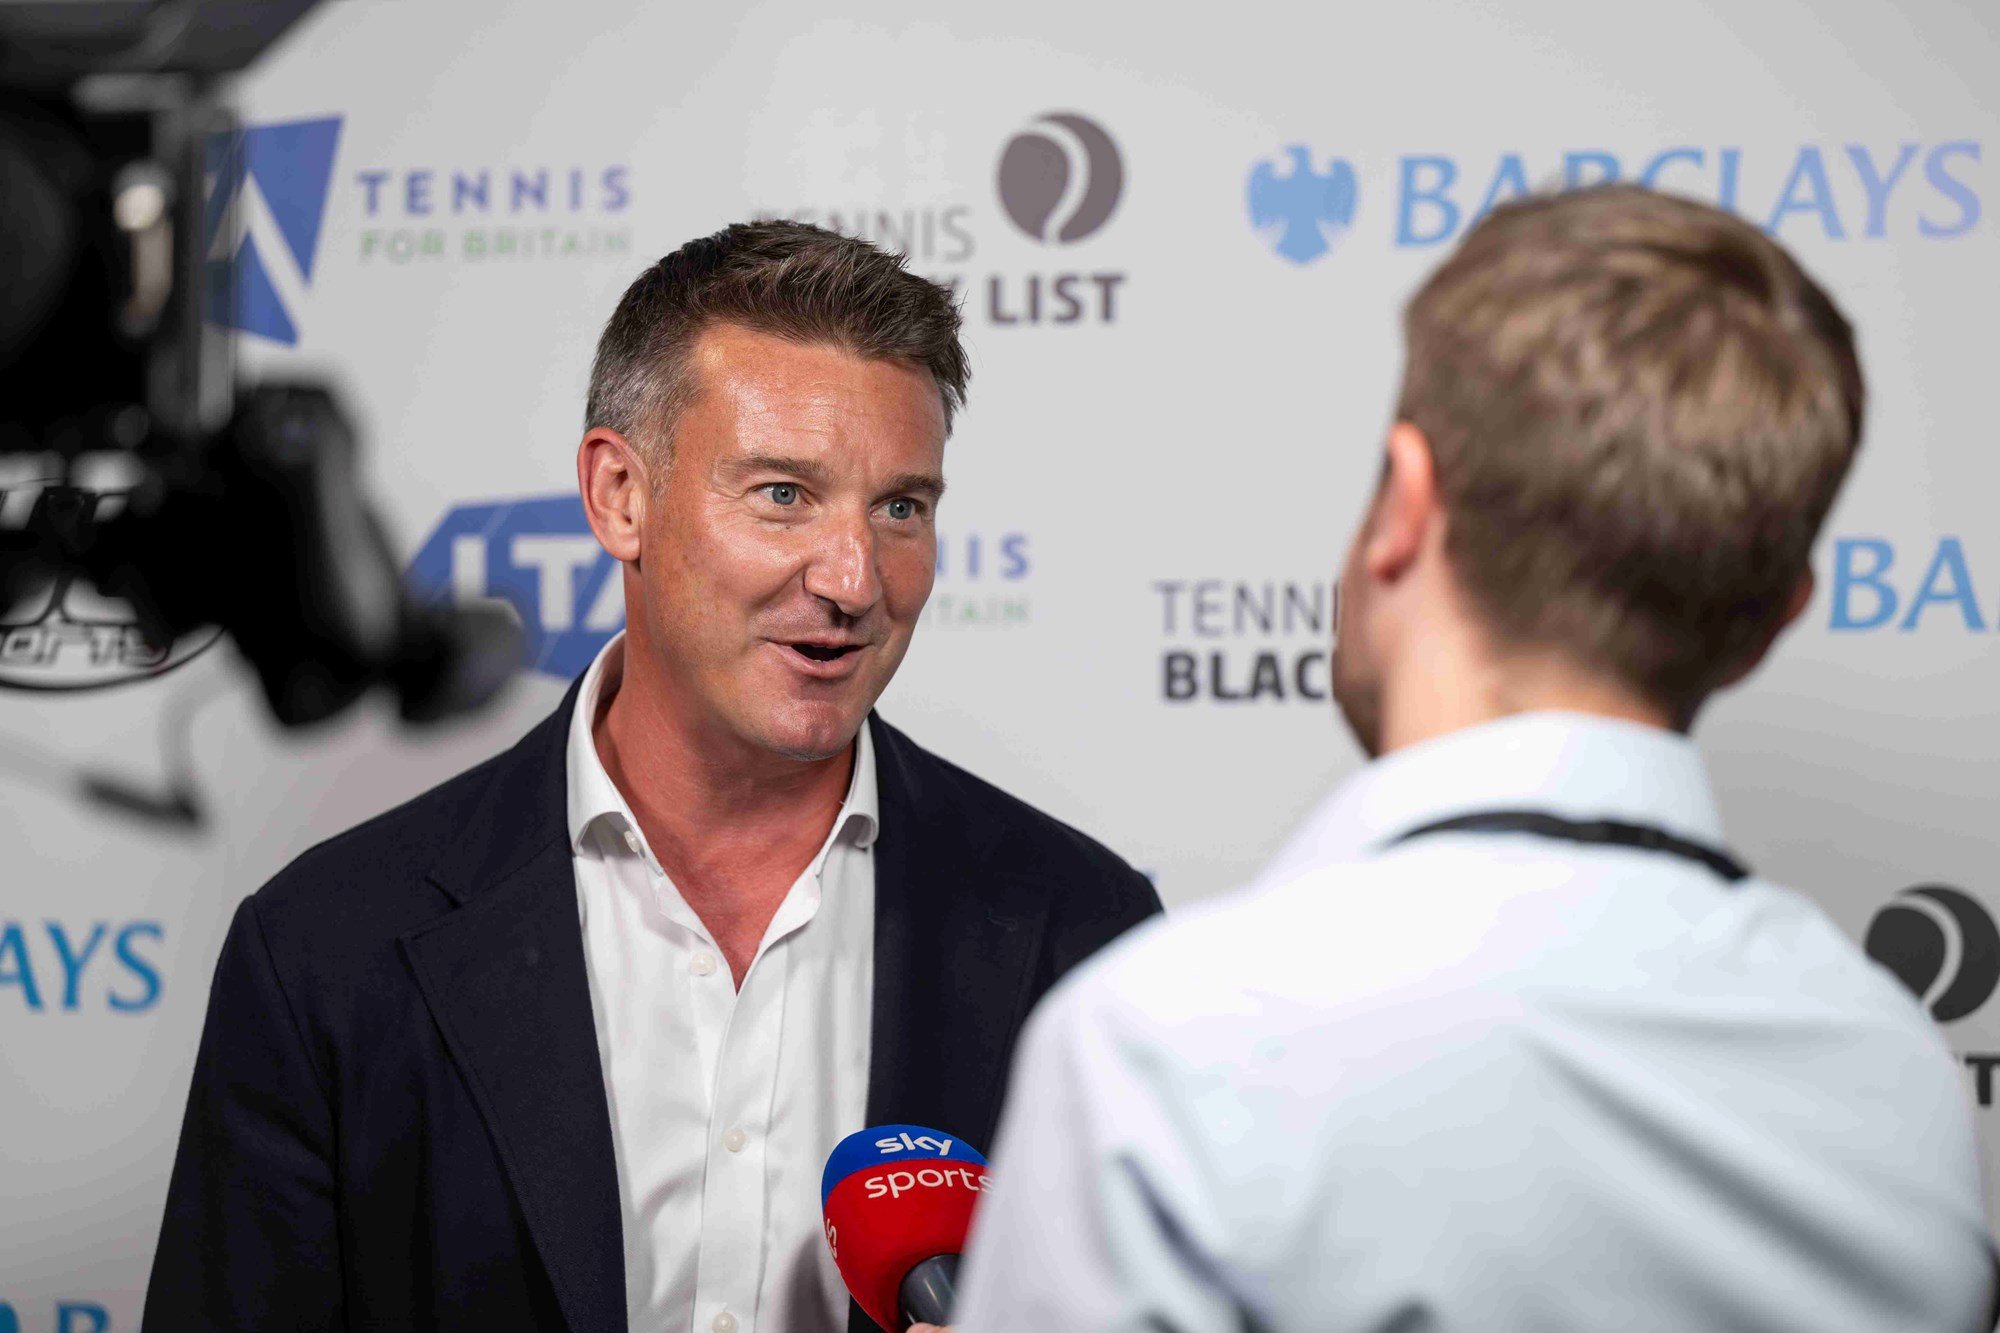 LTA CEO Scott Lloyd talking to a presenter at Sky Sports at the Tennis Black List awards